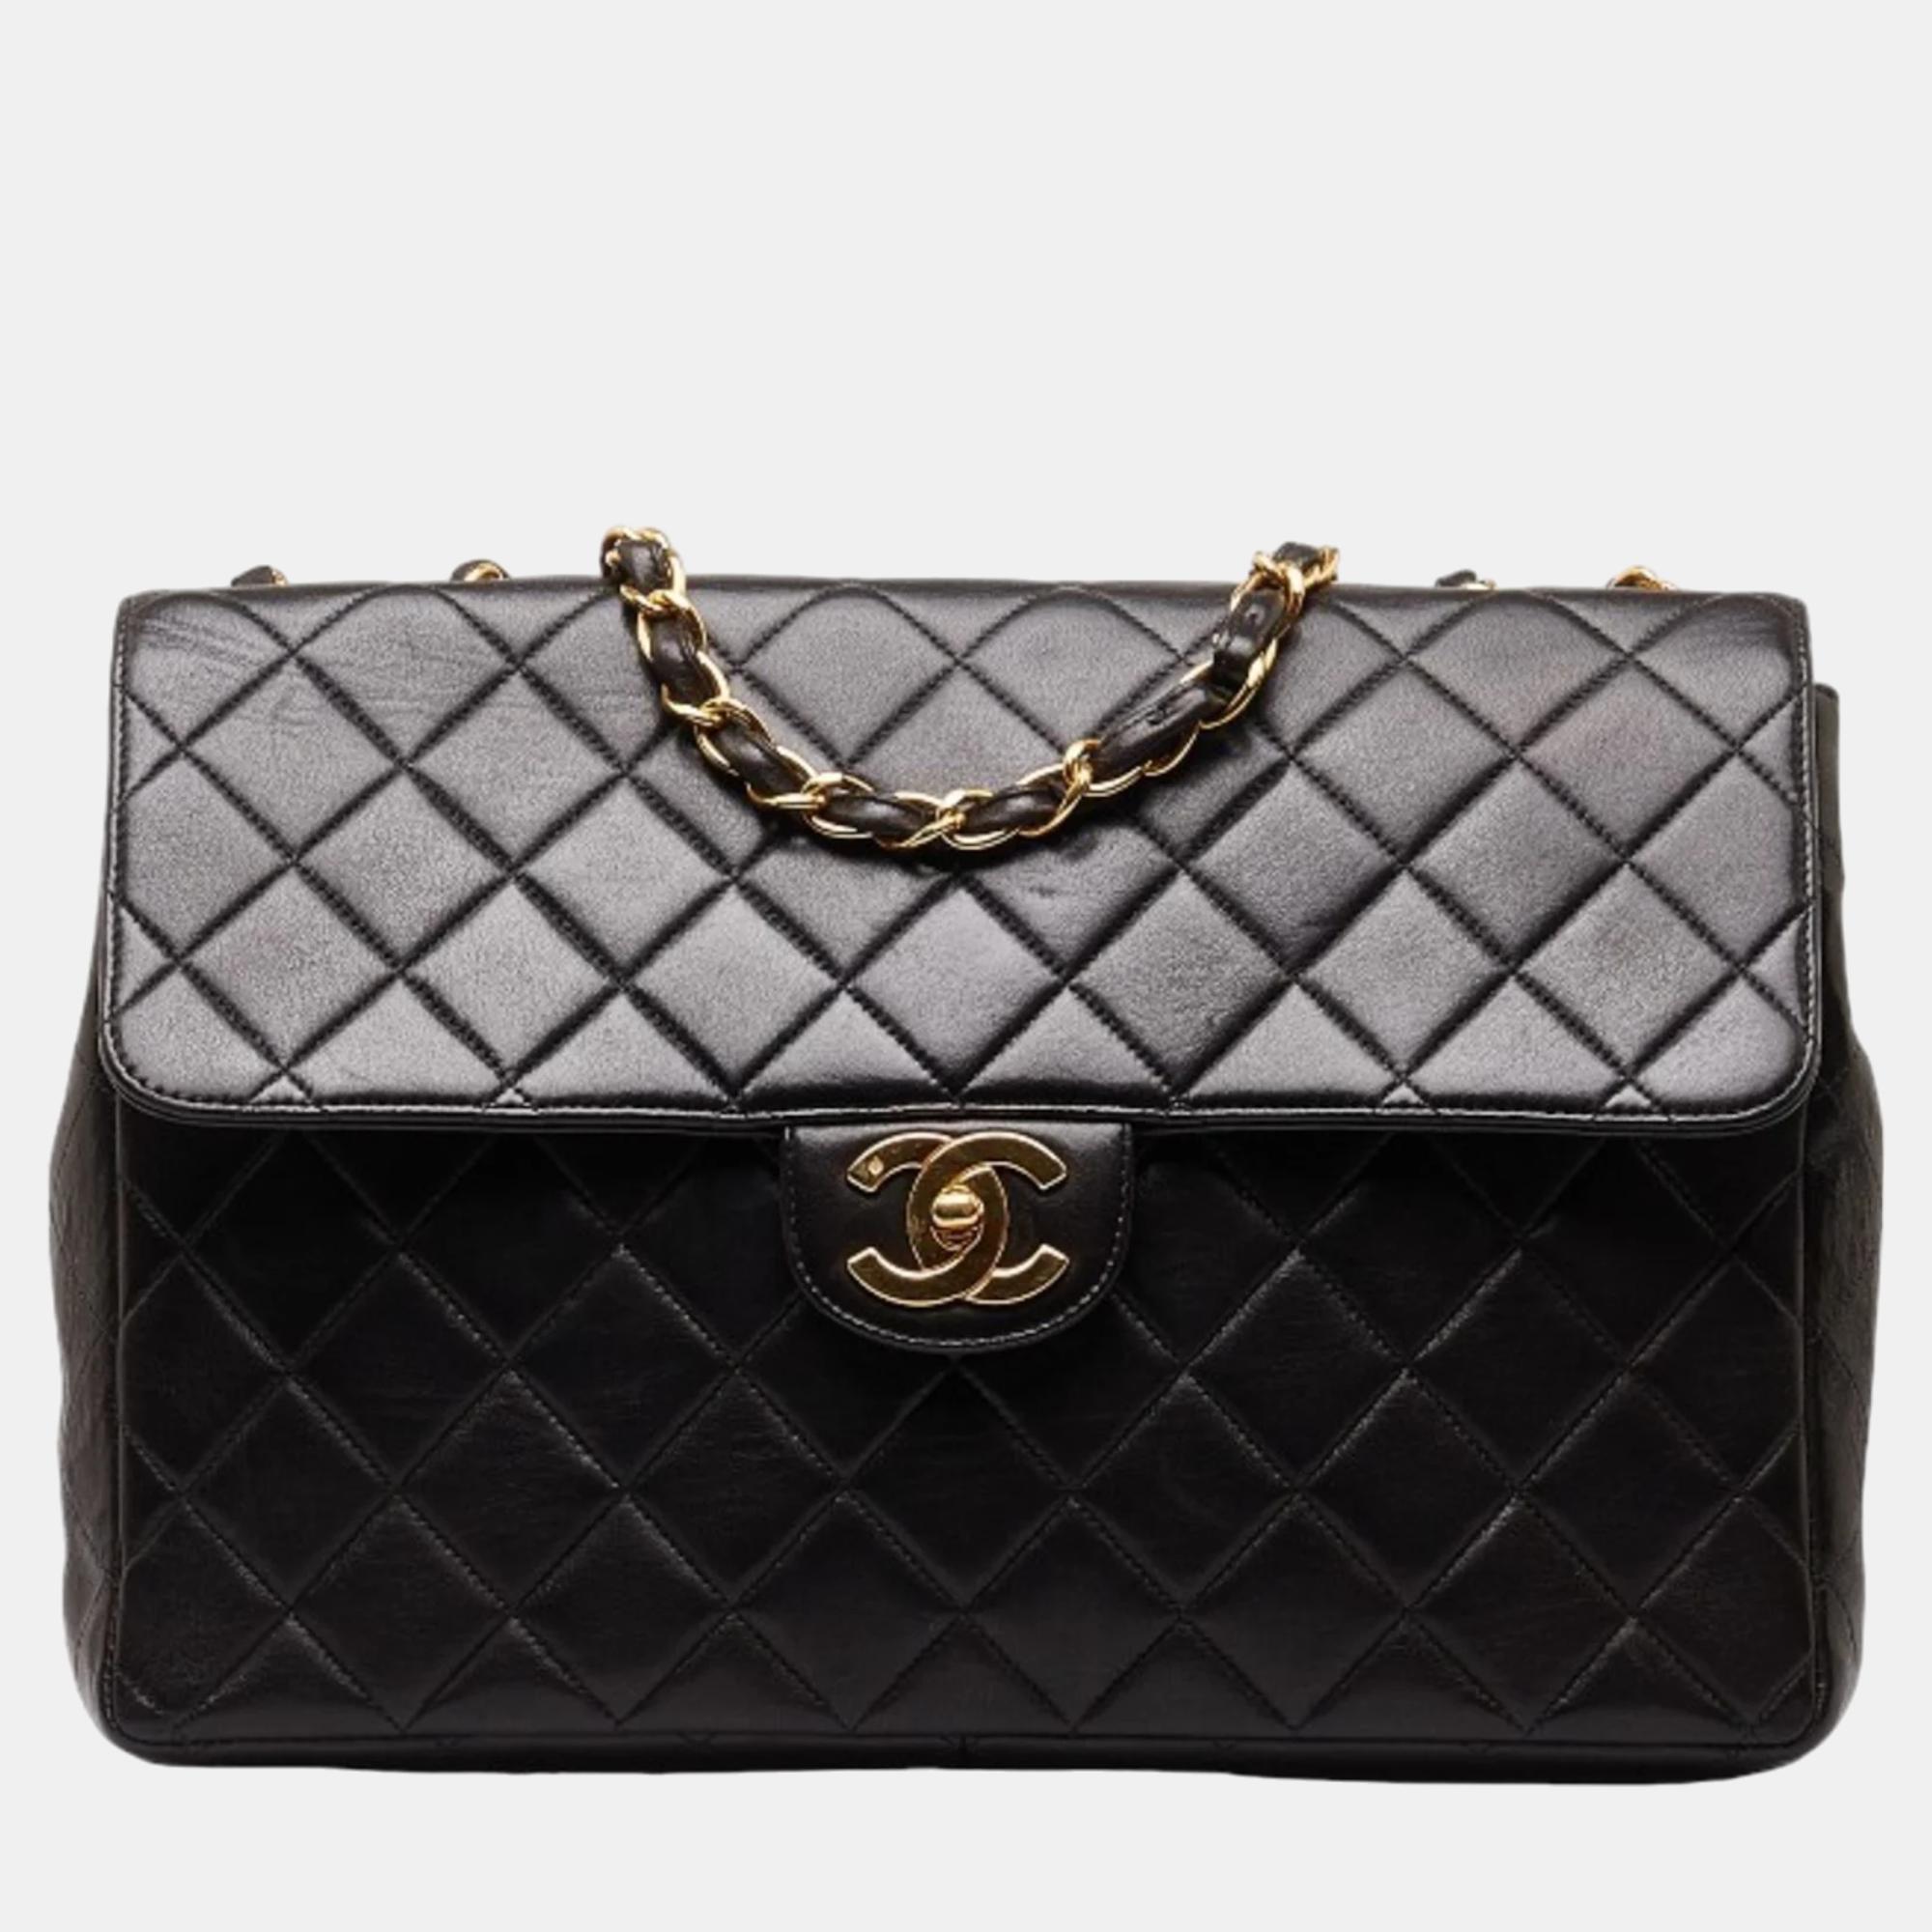 Chanel black leather jumbo single flap bag